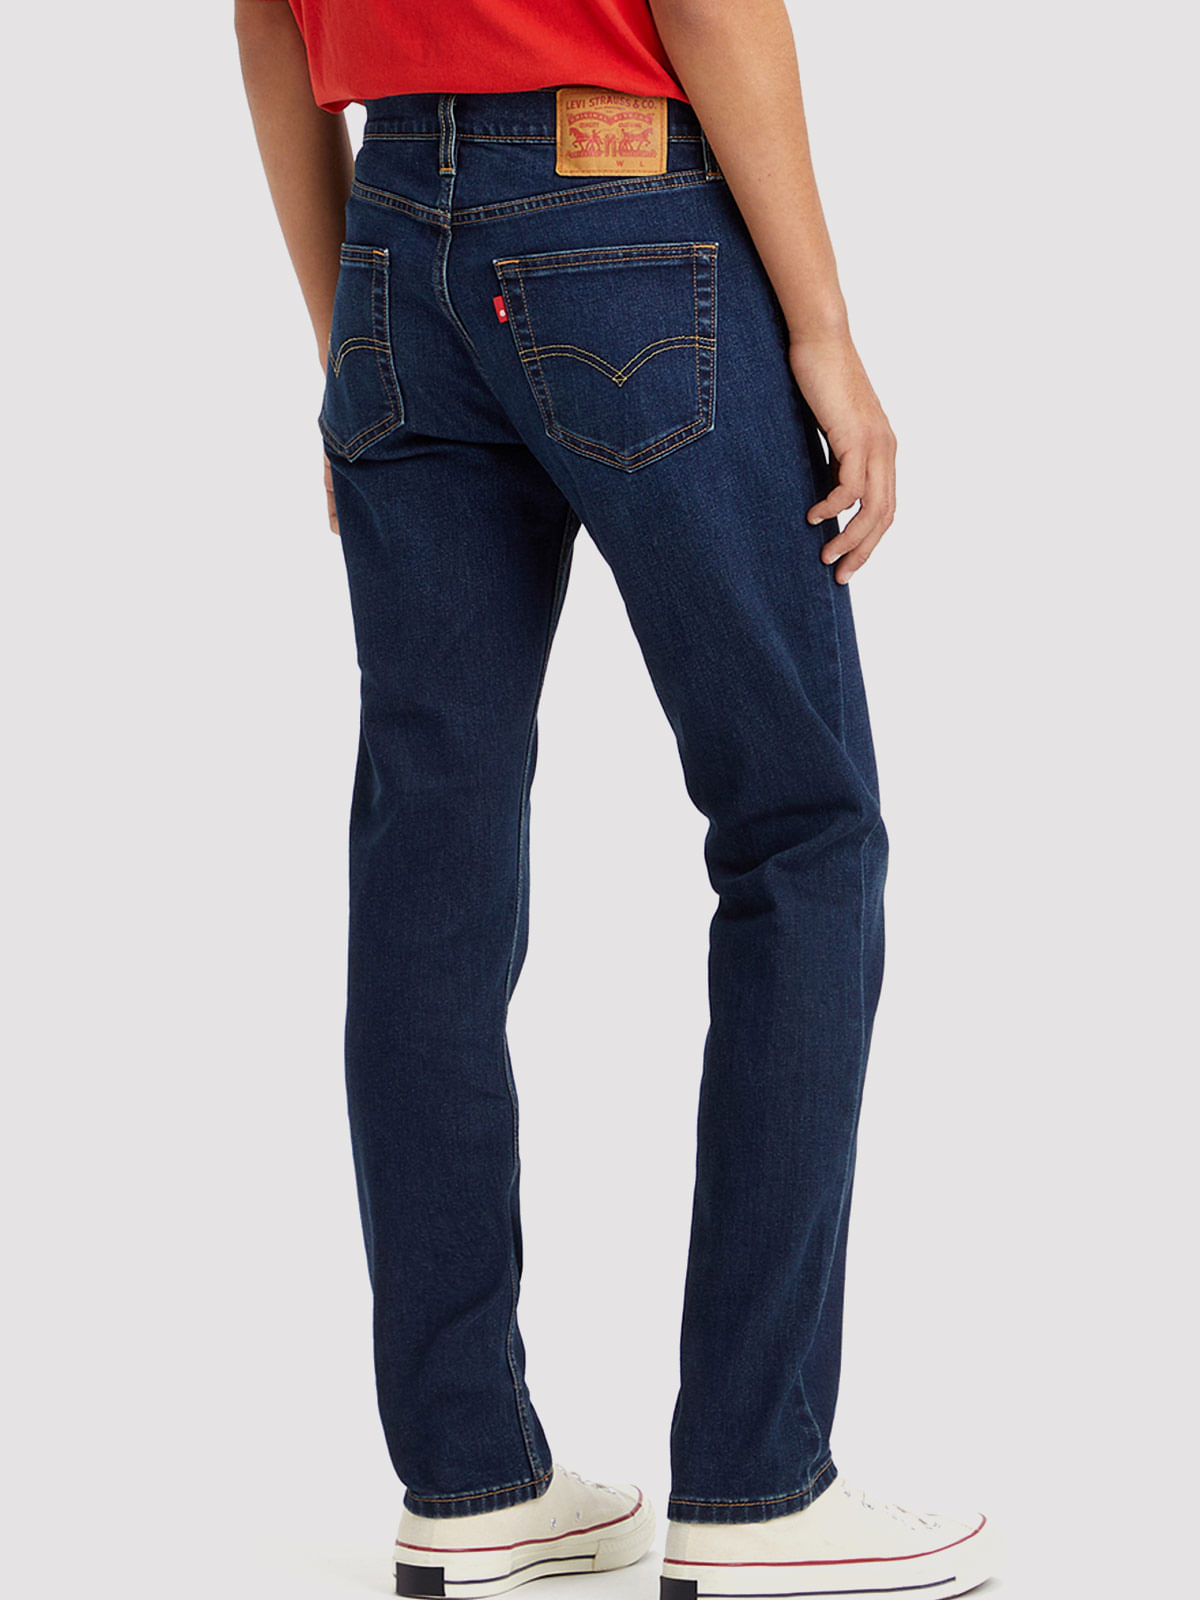 Jeans y Pantalones Levis 502 para Hombre, Levi's® Panamá - Tienda Oficial  de Levi's Online en Panama